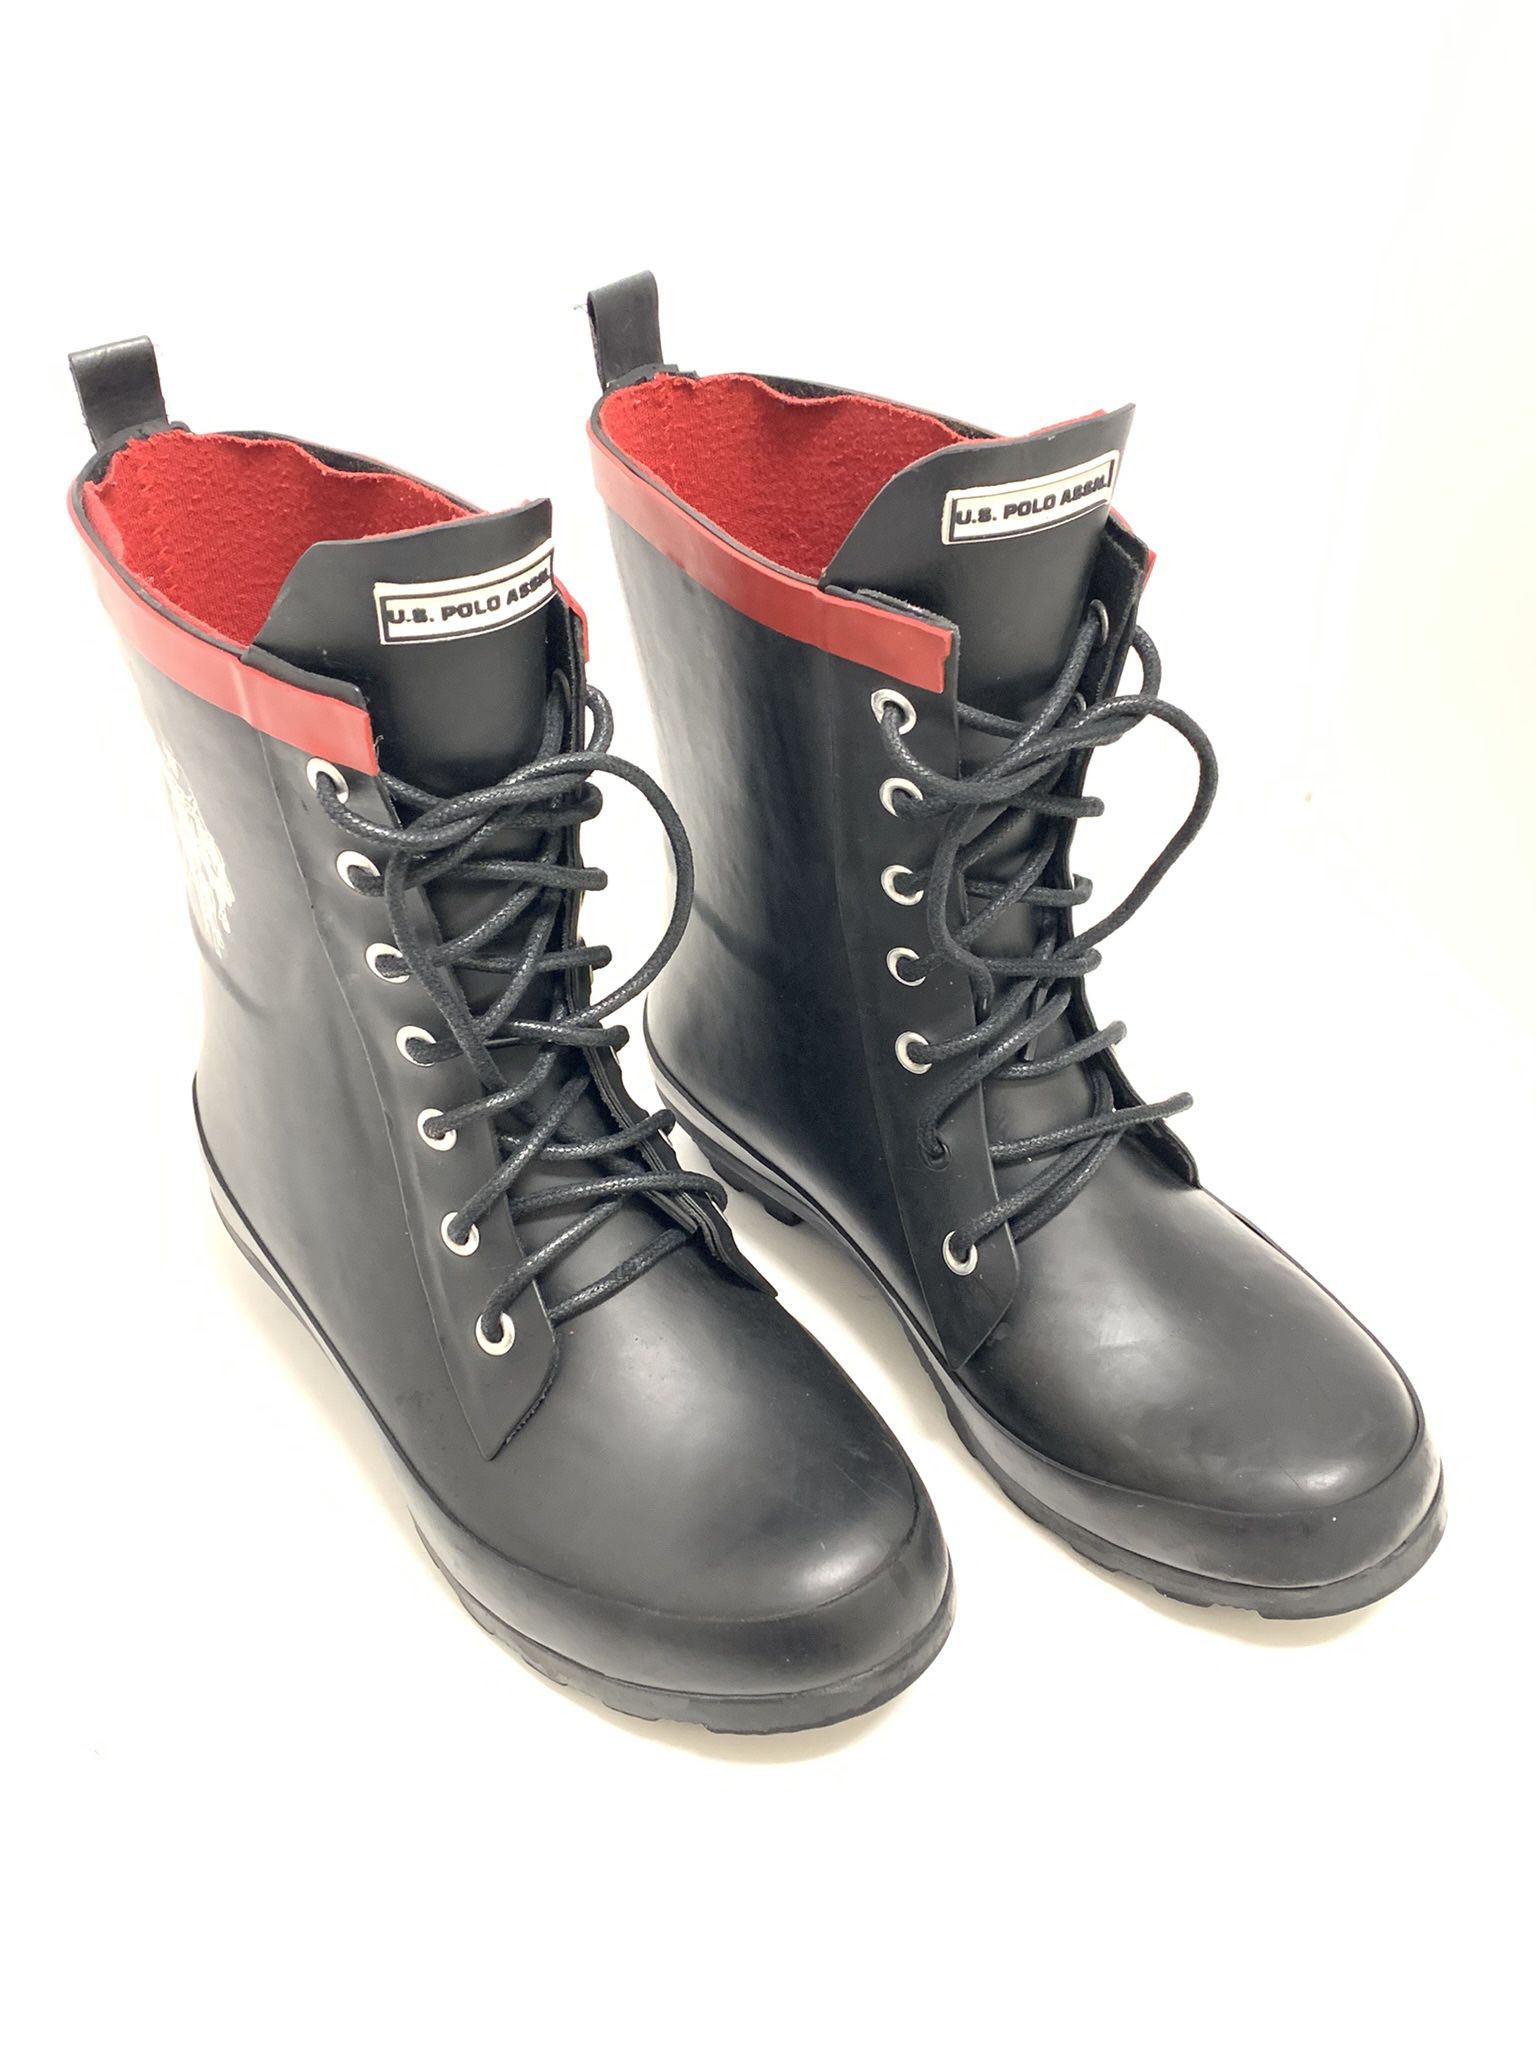 Women's U.S. POLO ASSN. - Jacky Rubber Rain Boots Red Black Size 6M